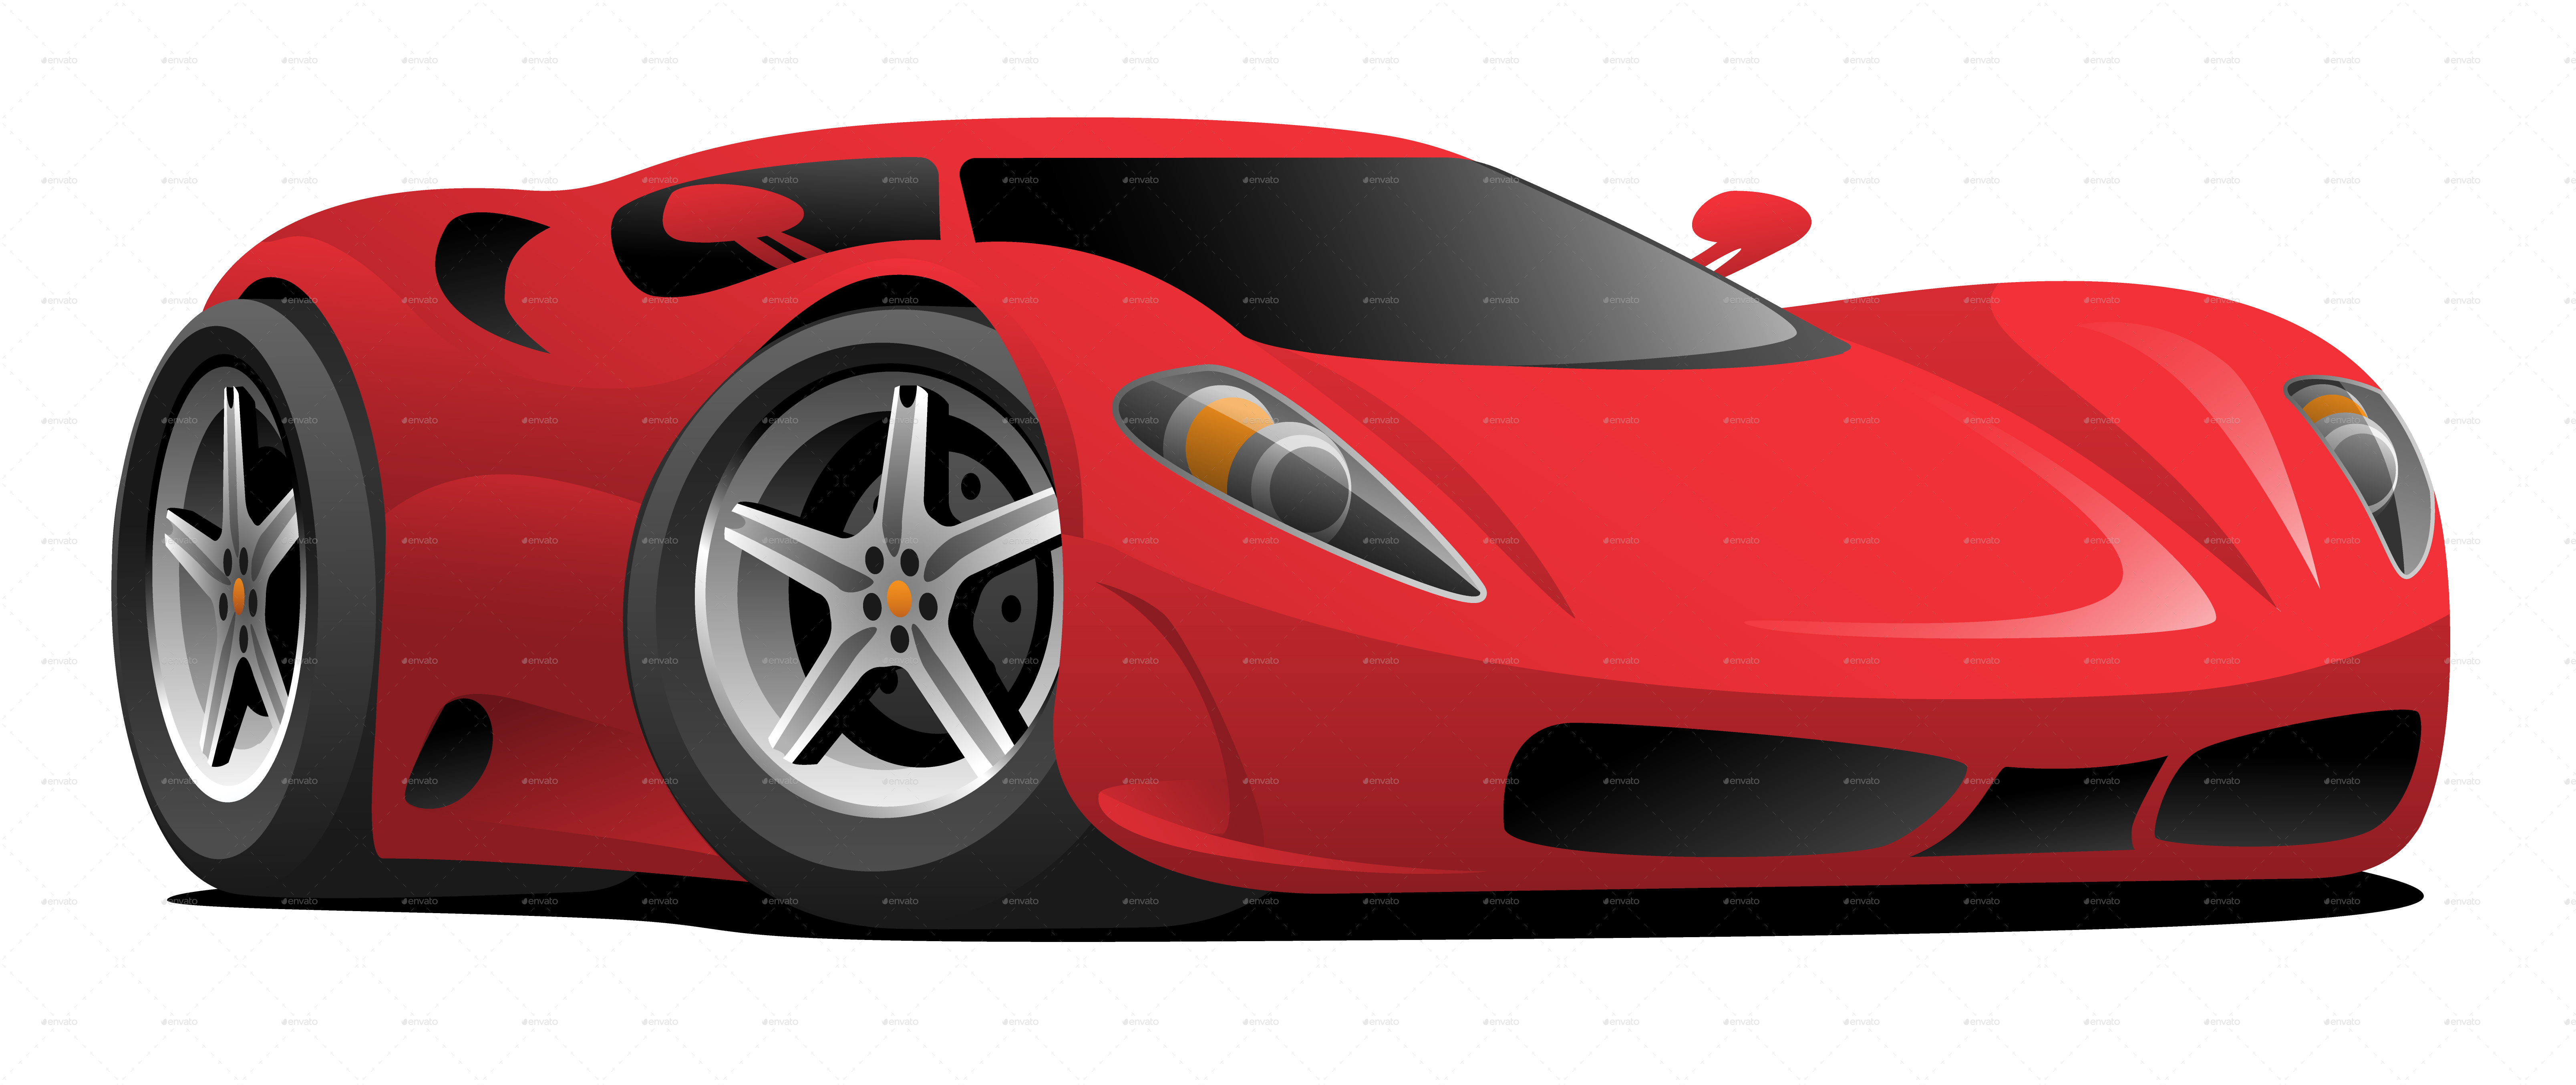 Red Hot European Style Sports Car Cartoon by jeffhobrath | GraphicRiver